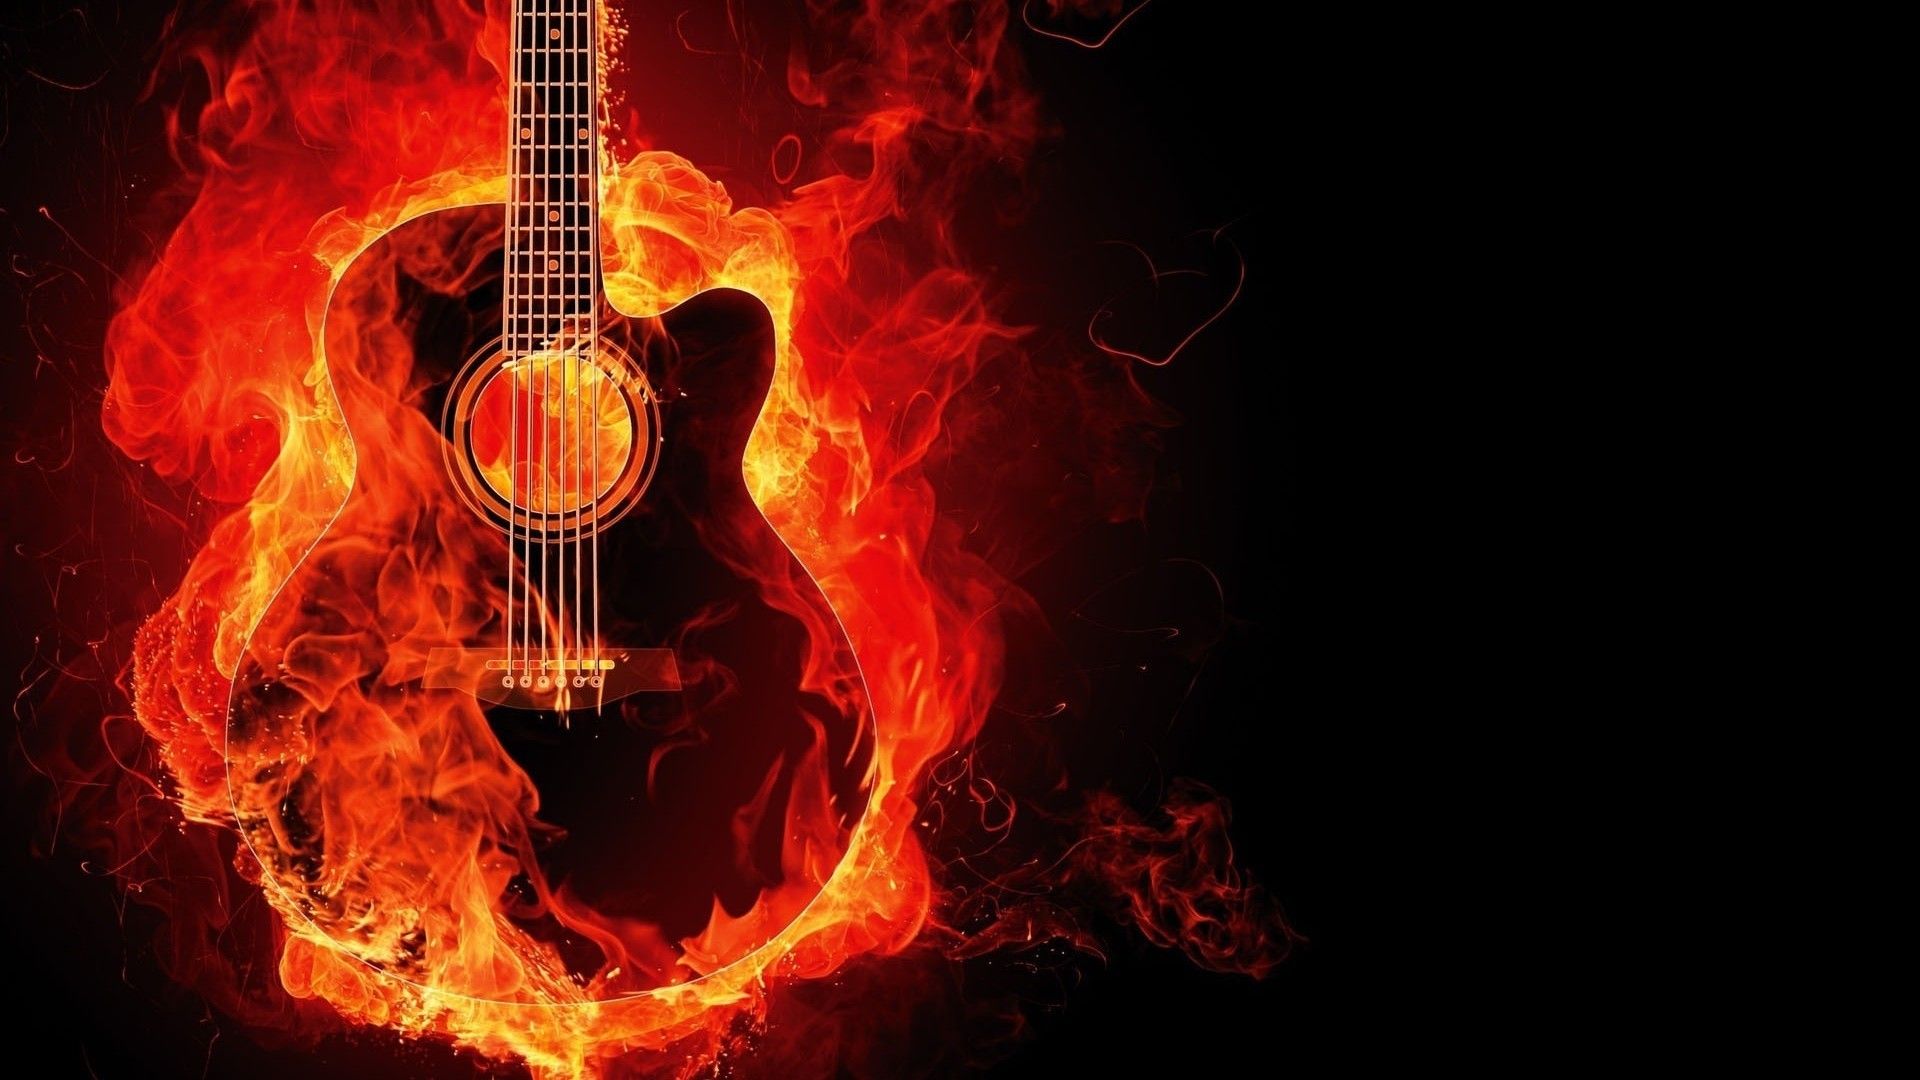 Fire Guitar Art 21270 HD Wallpaper Picture Of Guitars Wallpaper & Background Download